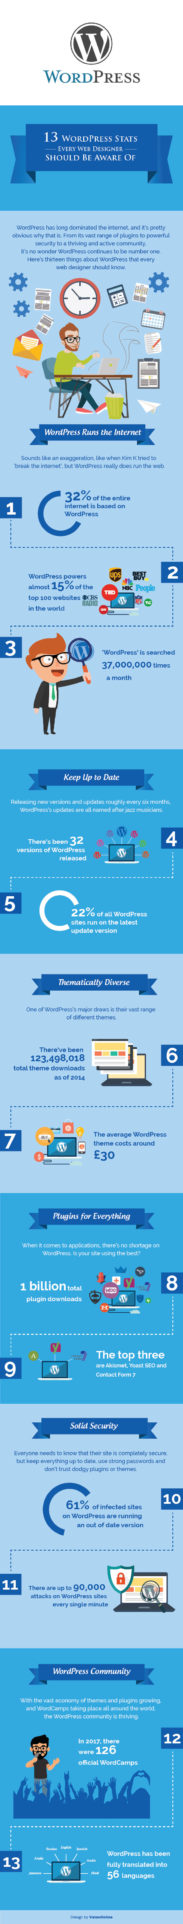 13 WordPress Stats Every Web Designer Should Be Aware Of